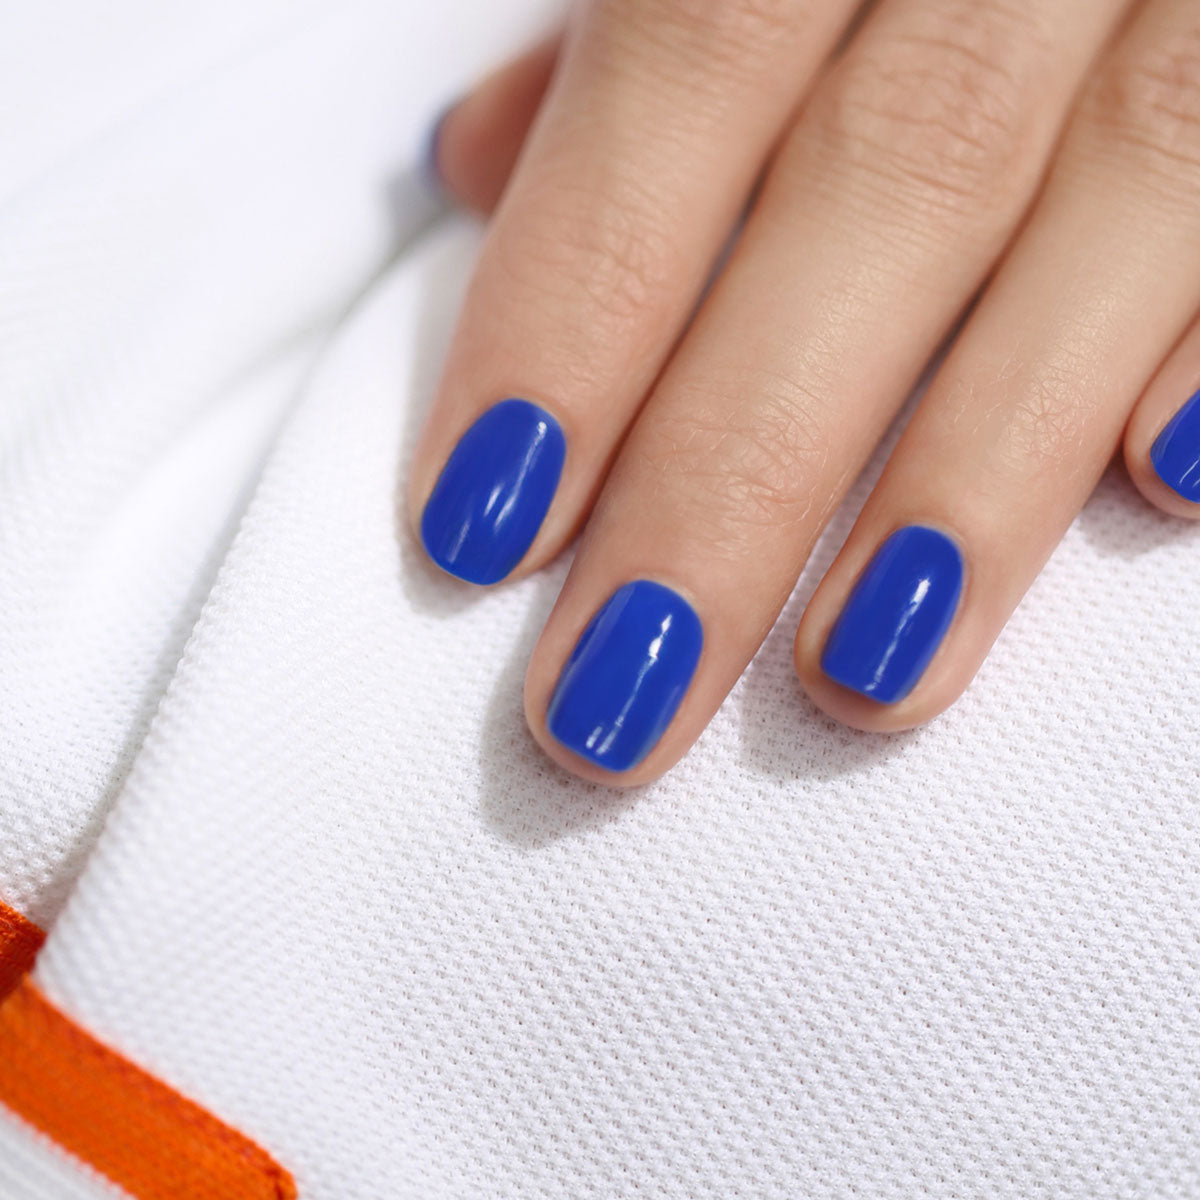 Electric blue LED nail polish - The alternative to gel nail polish 